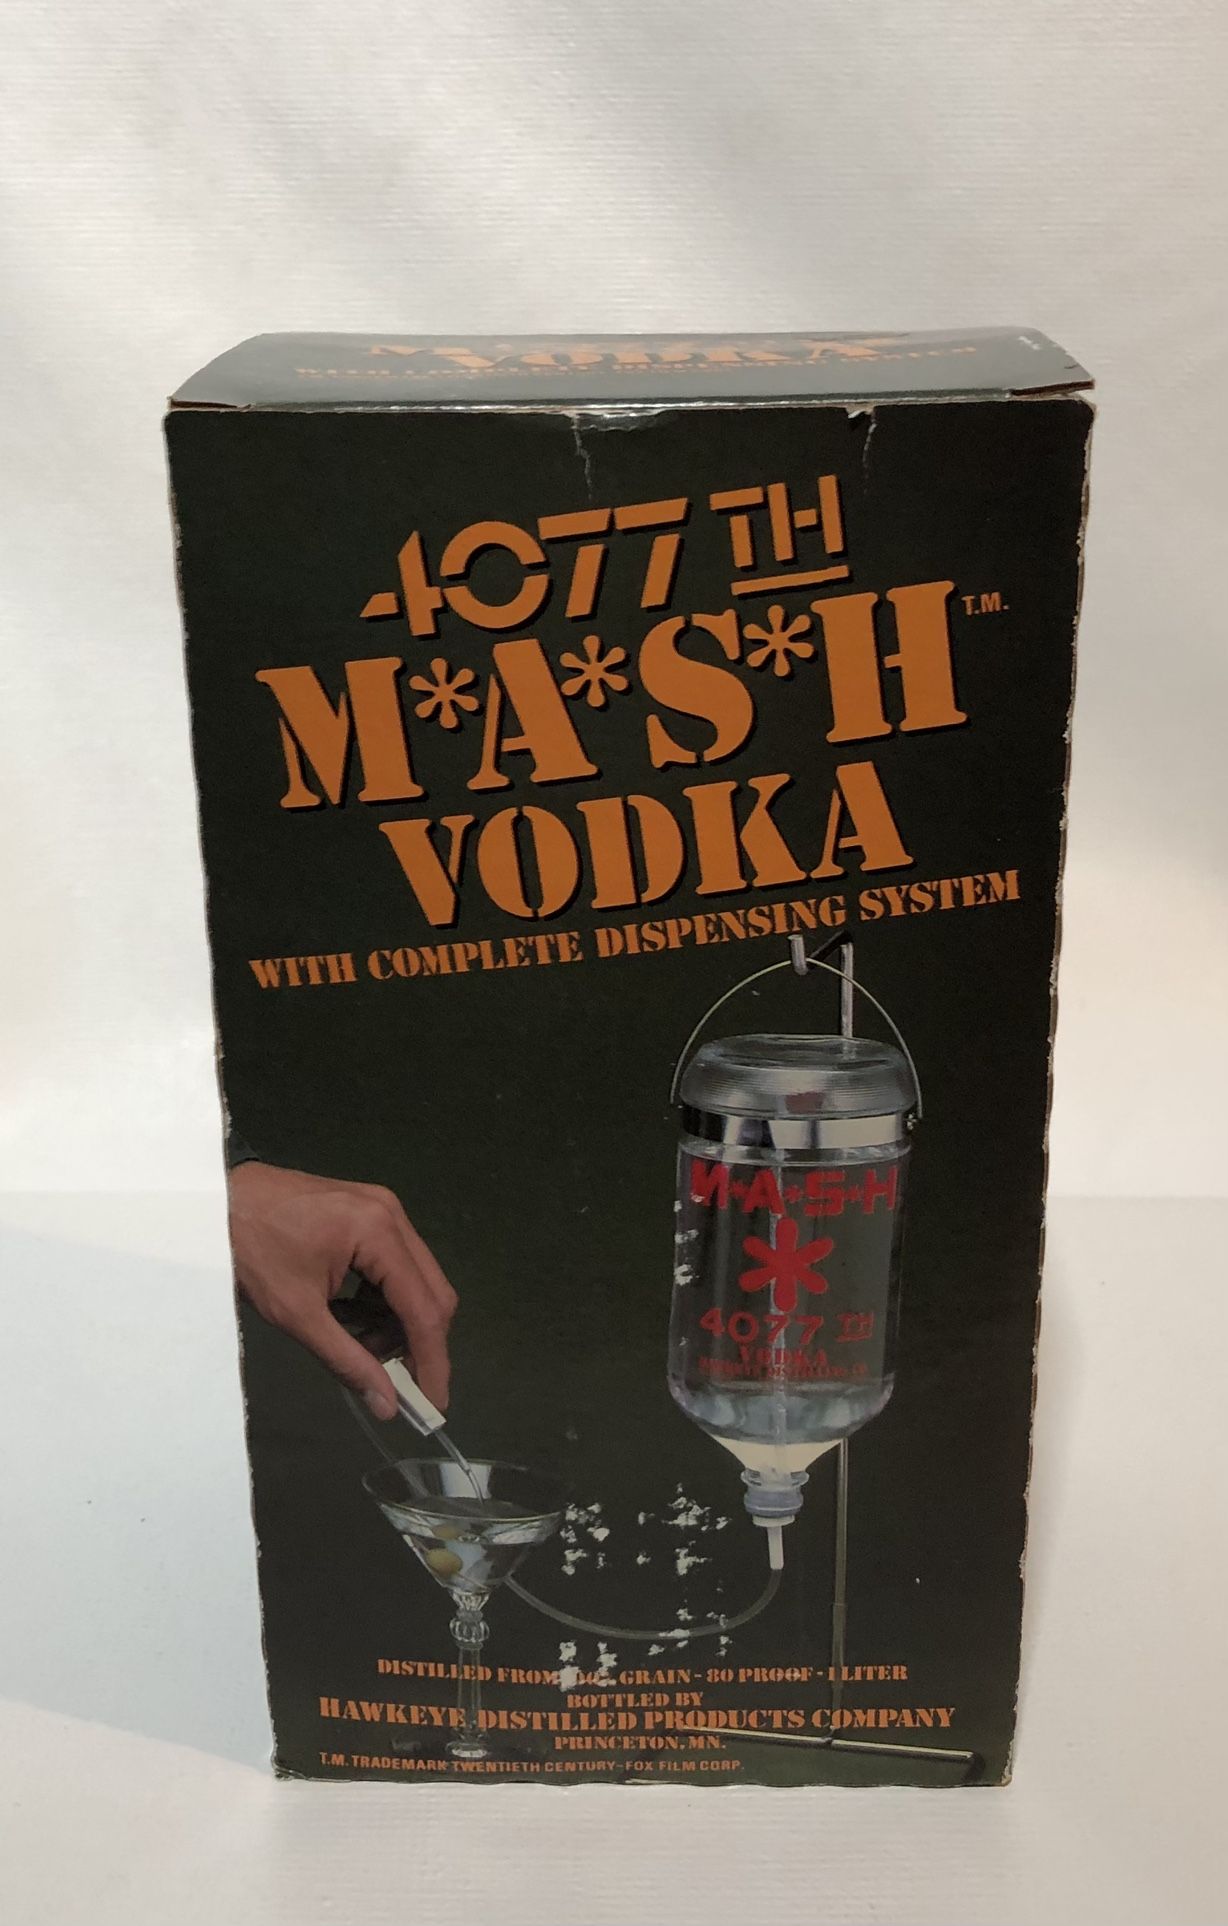 Vintage MASH 4077th Medical Vodka IV drip